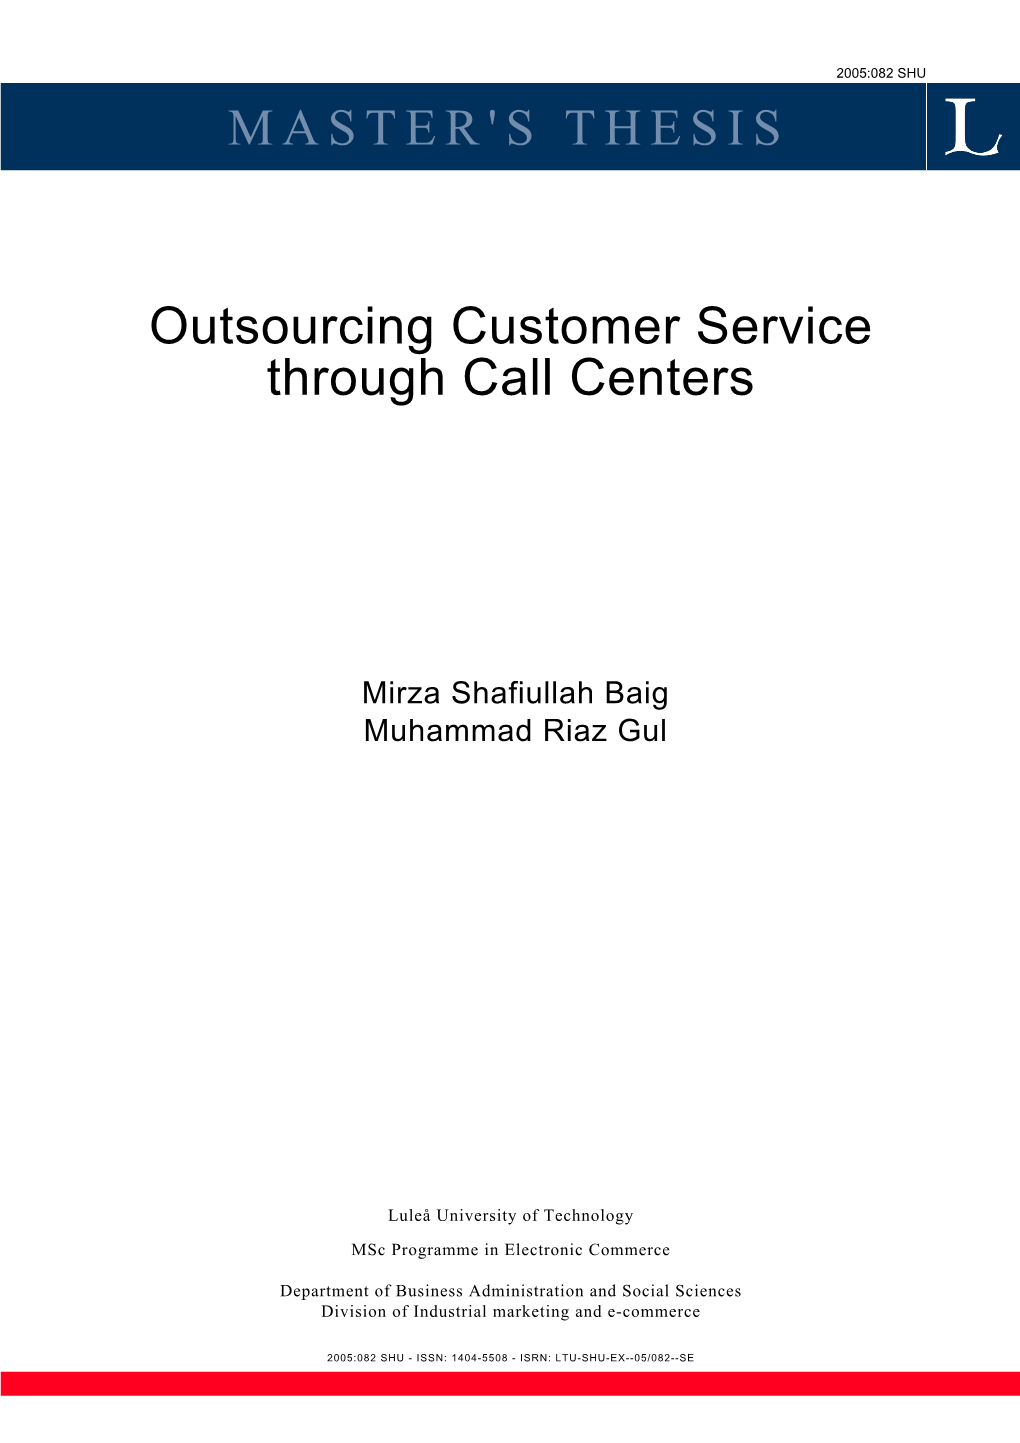 Outsourcing Customer Service Through Call Centers